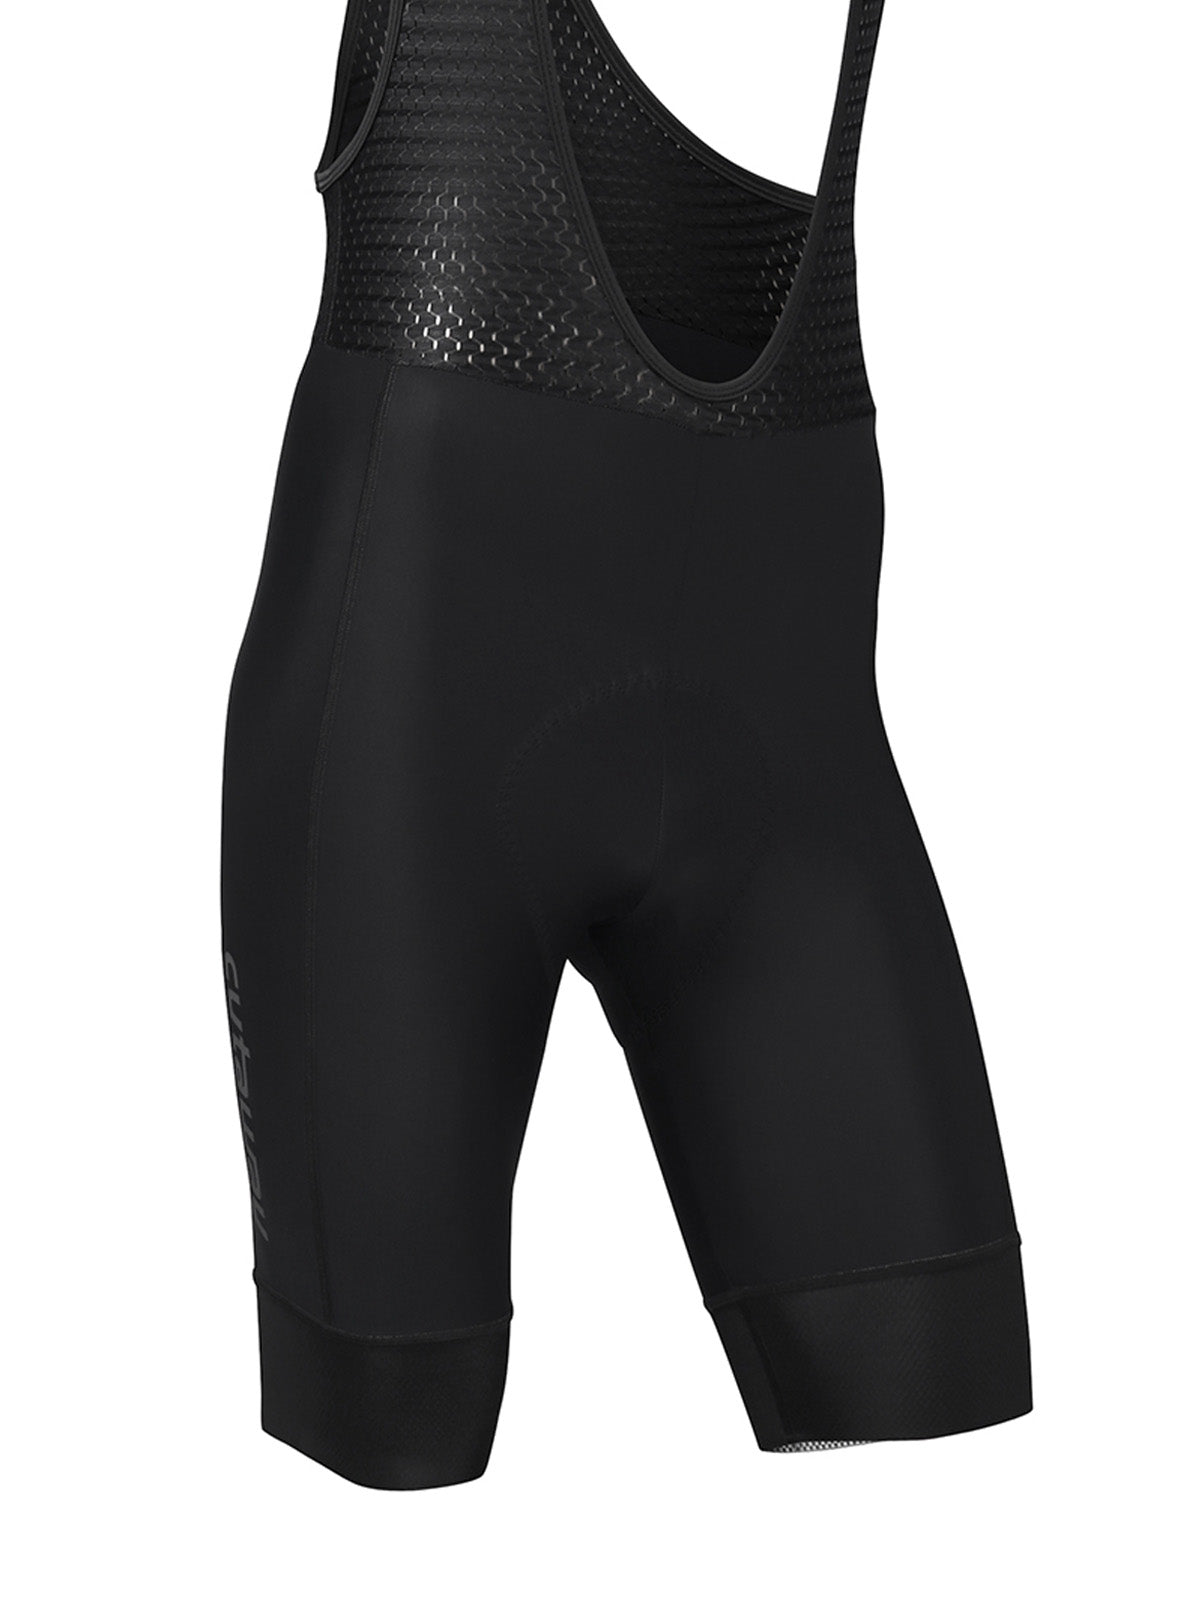 THERMAL Bib Shorts - Black, premium cycle products